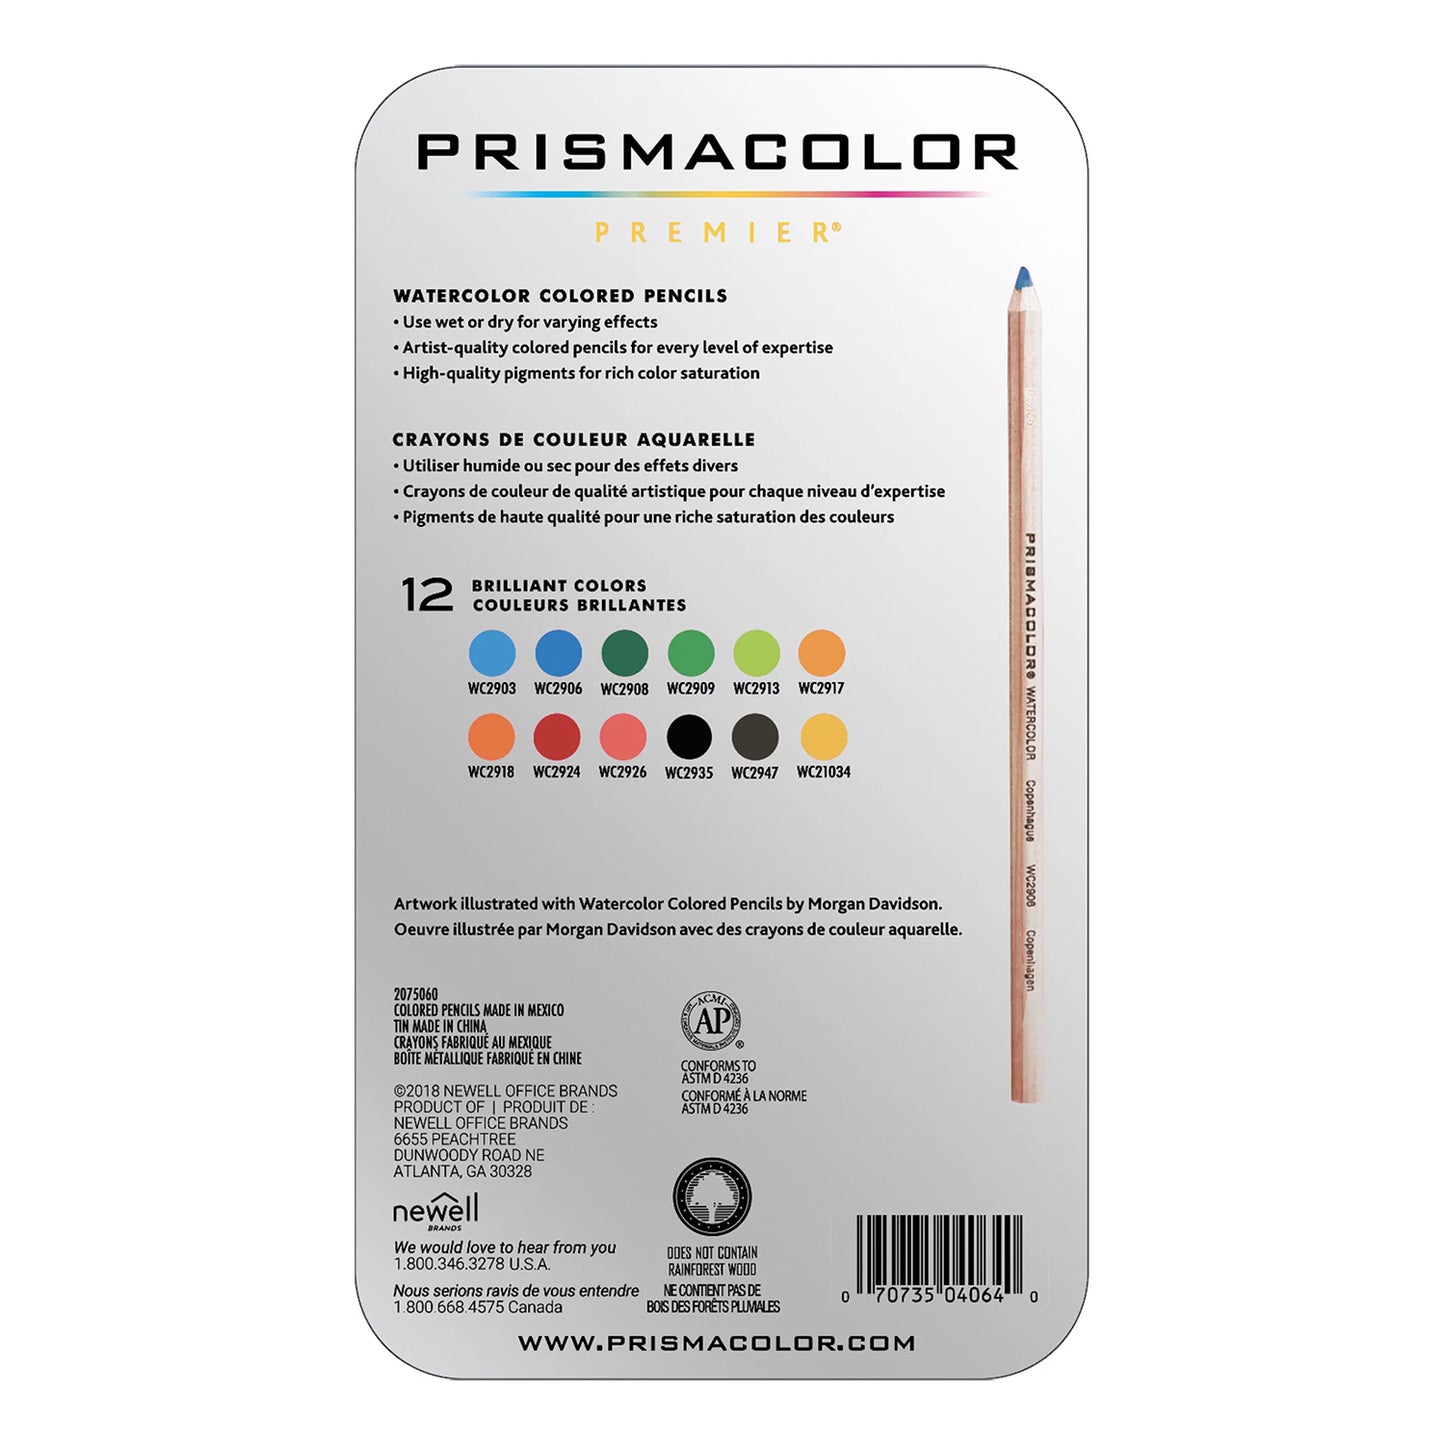 Lápiz acuarelable Prismacolor Premier, 12 u.